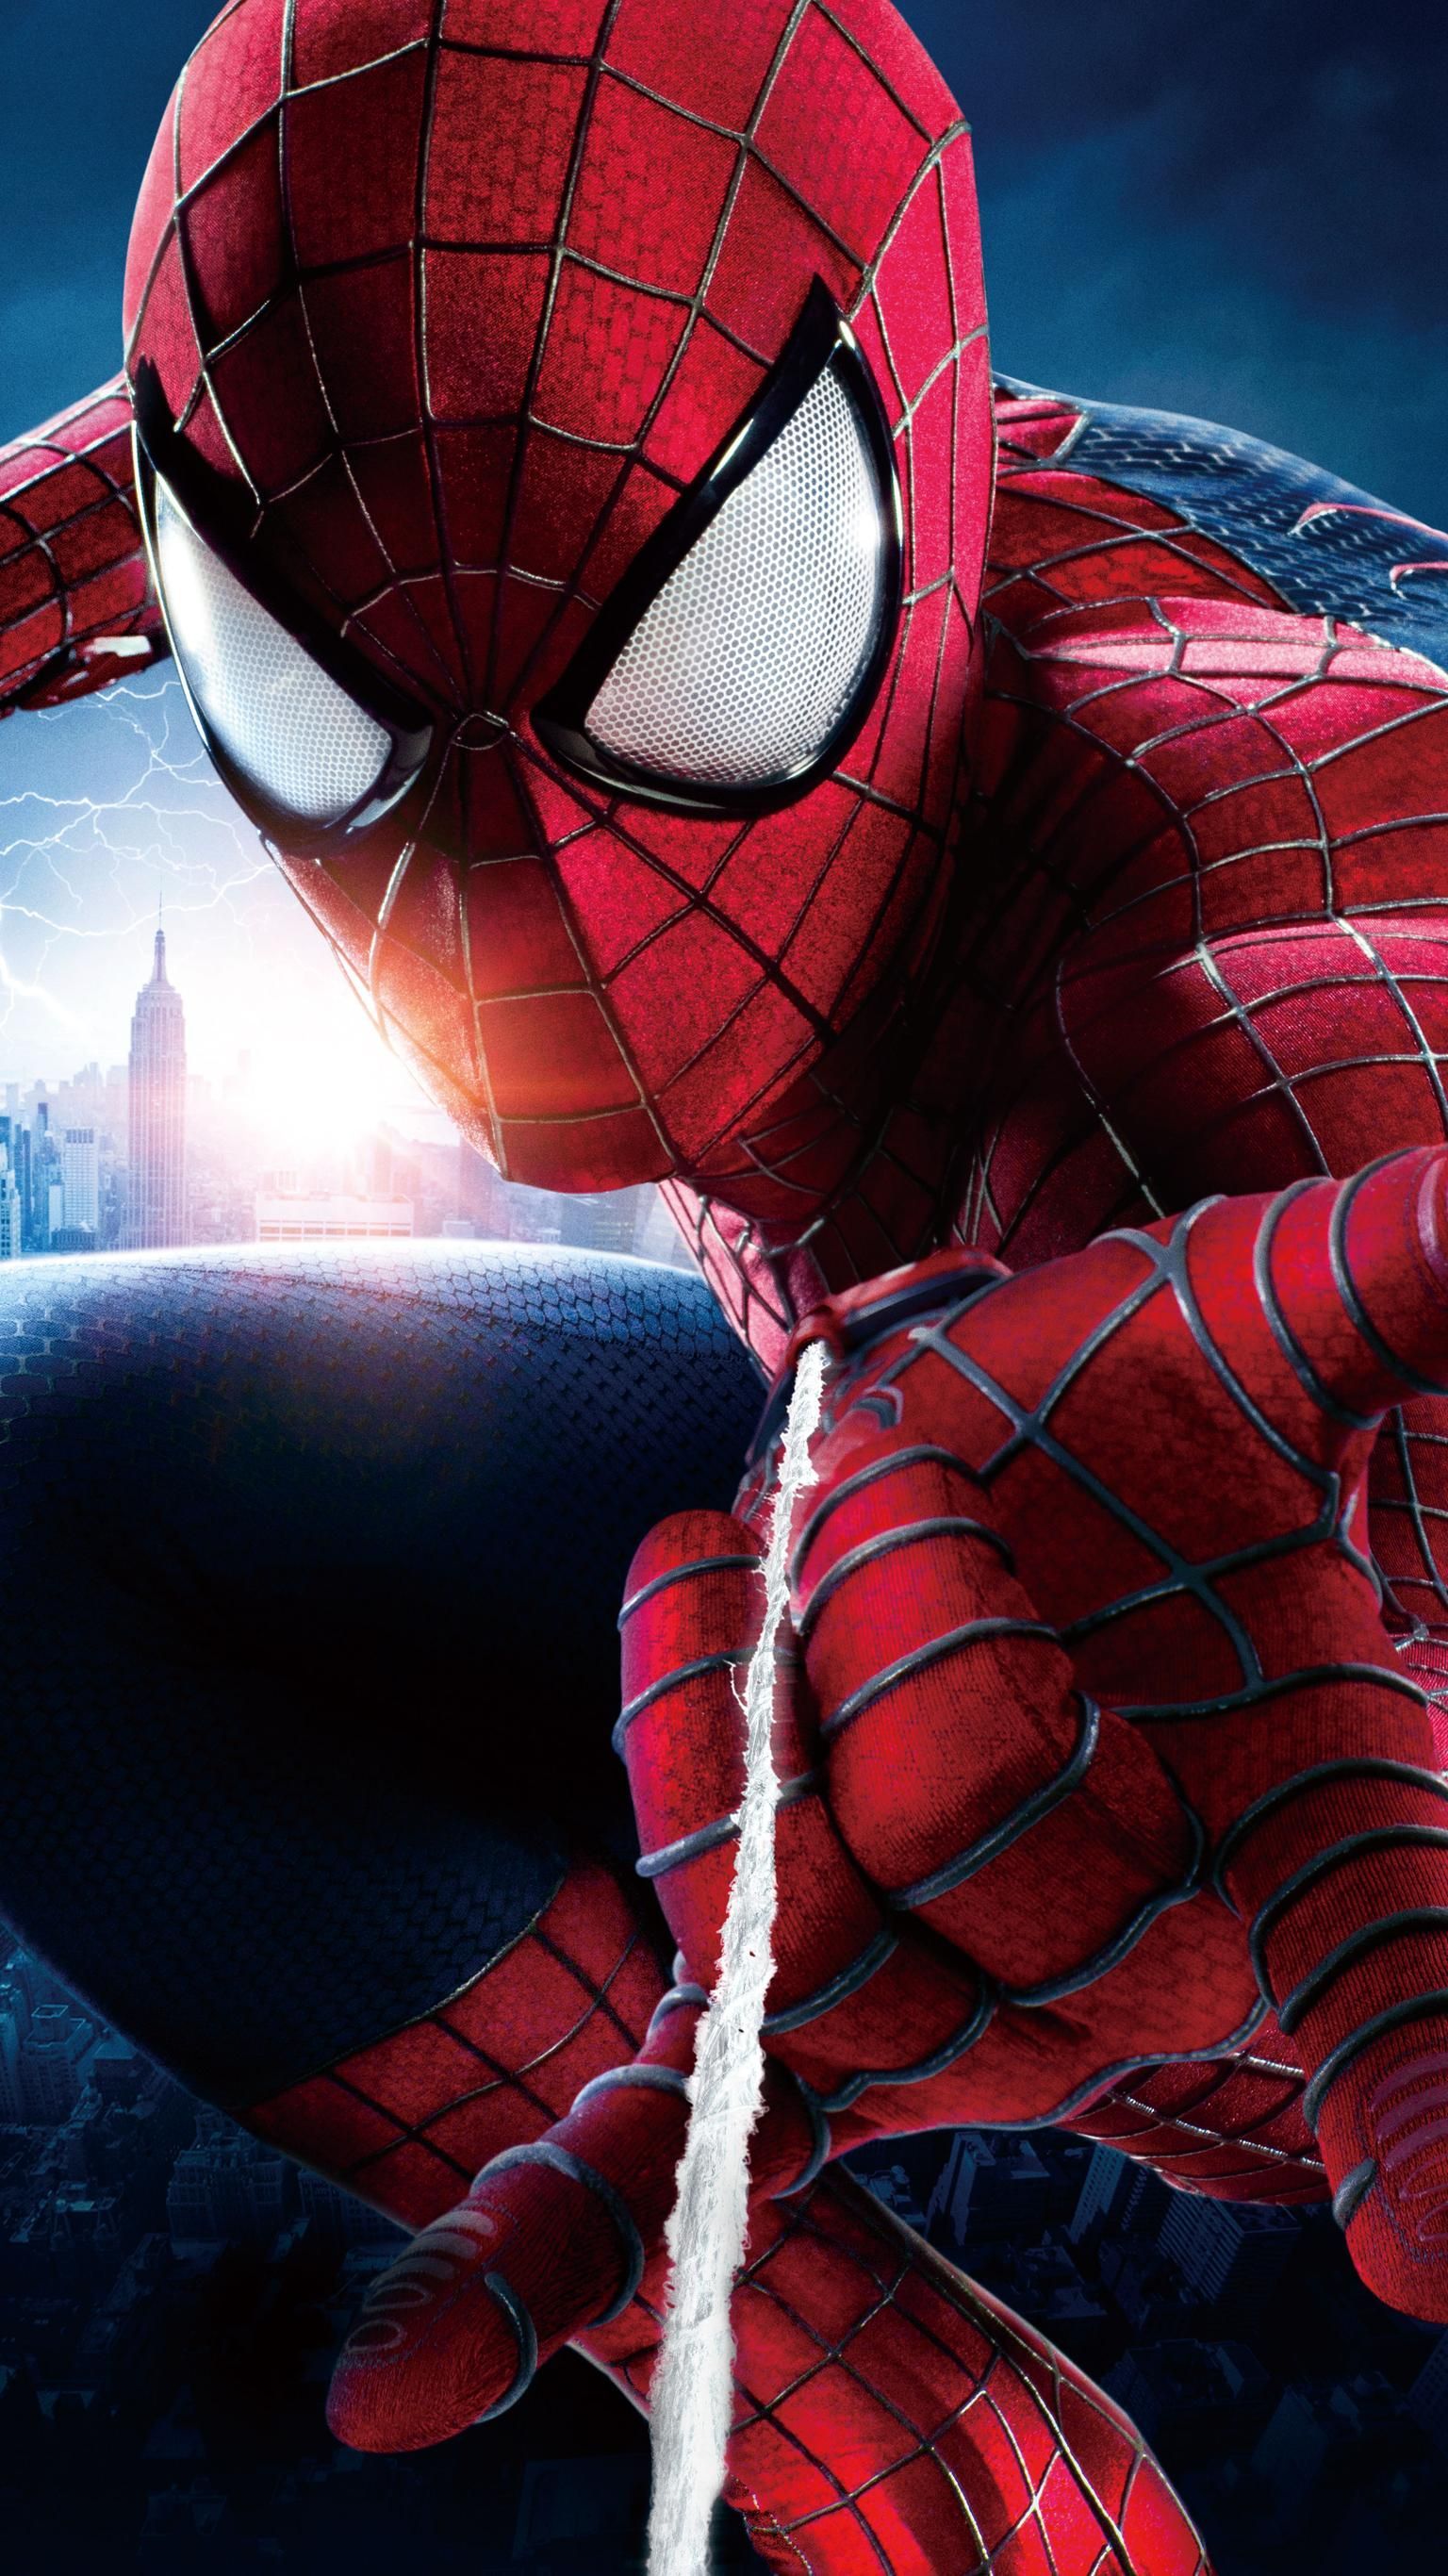 The Amazing Spider Man 2 (2014) Phone Wallpaper En 2020. Imagenes Del Hombre Araña, Amazing Spiderman, Spiderman